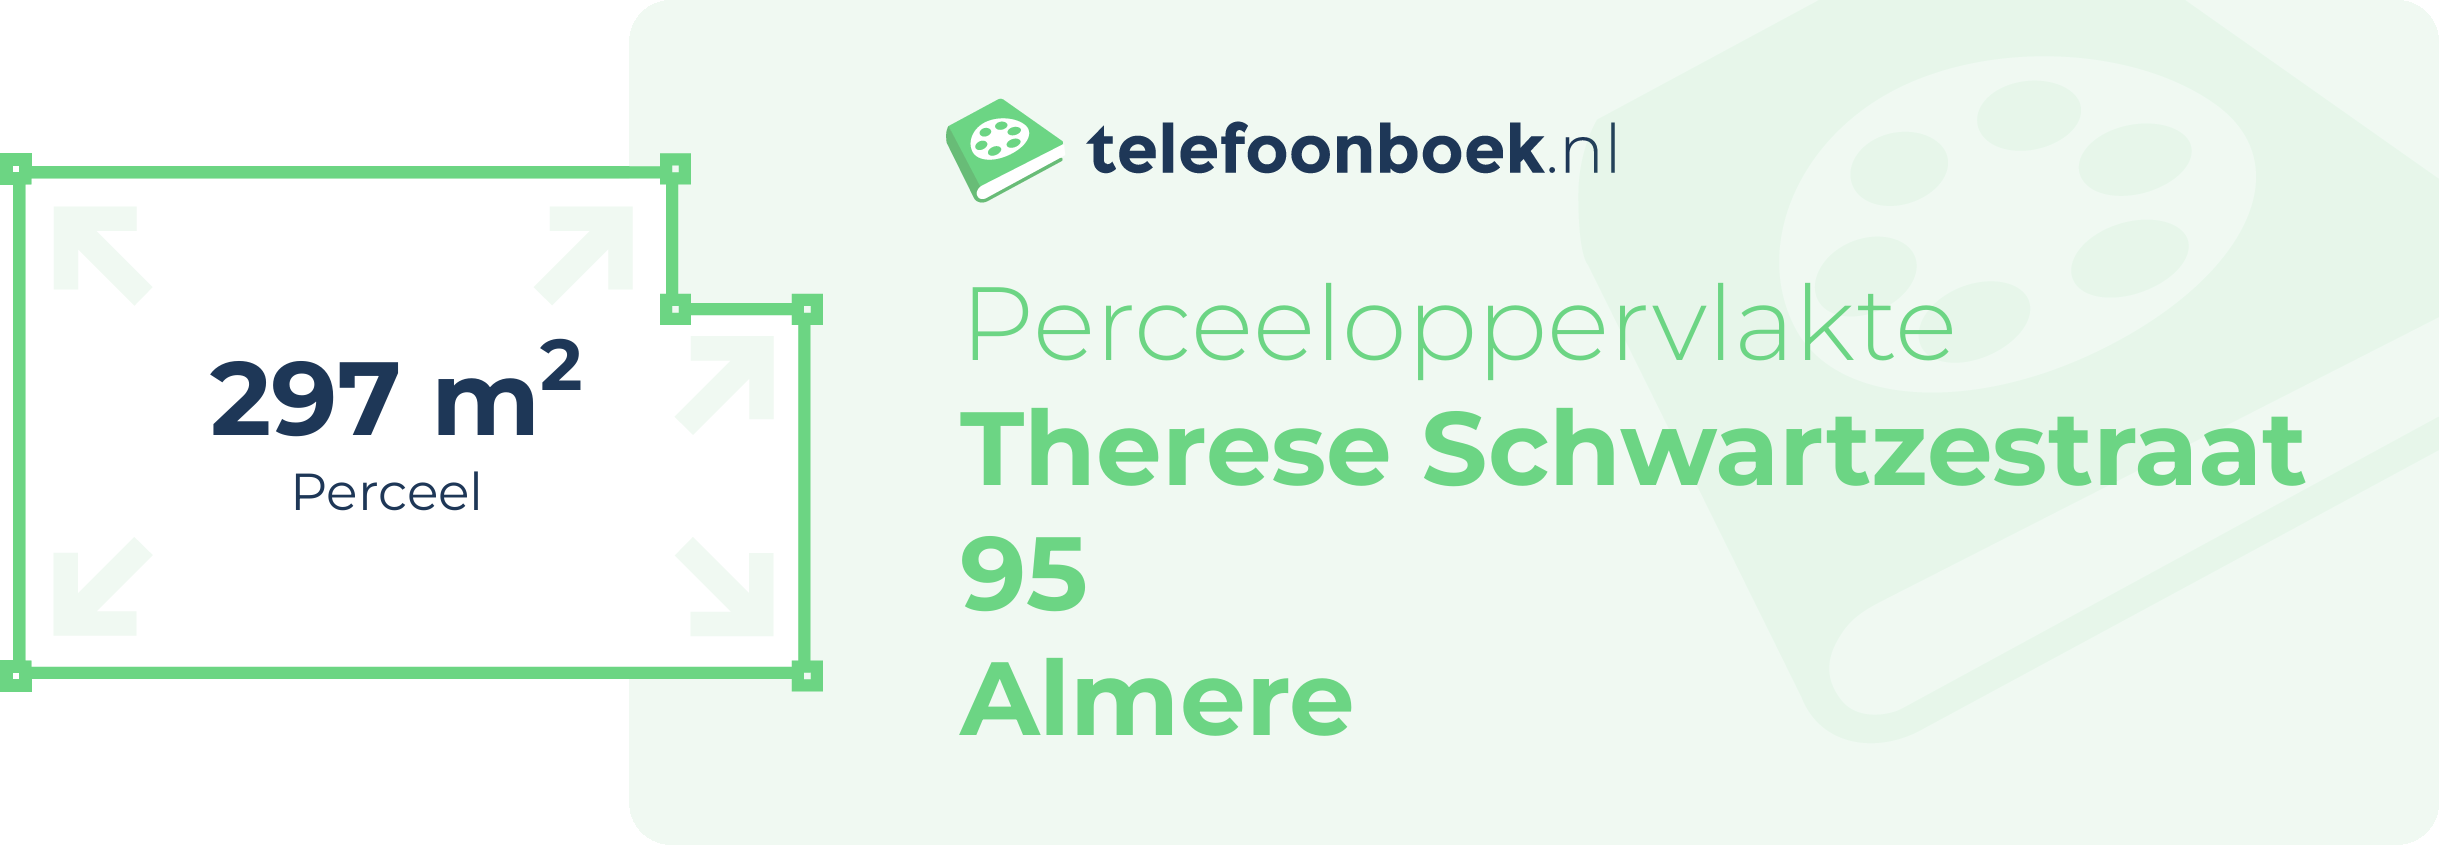 Perceeloppervlakte Therese Schwartzestraat 95 Almere